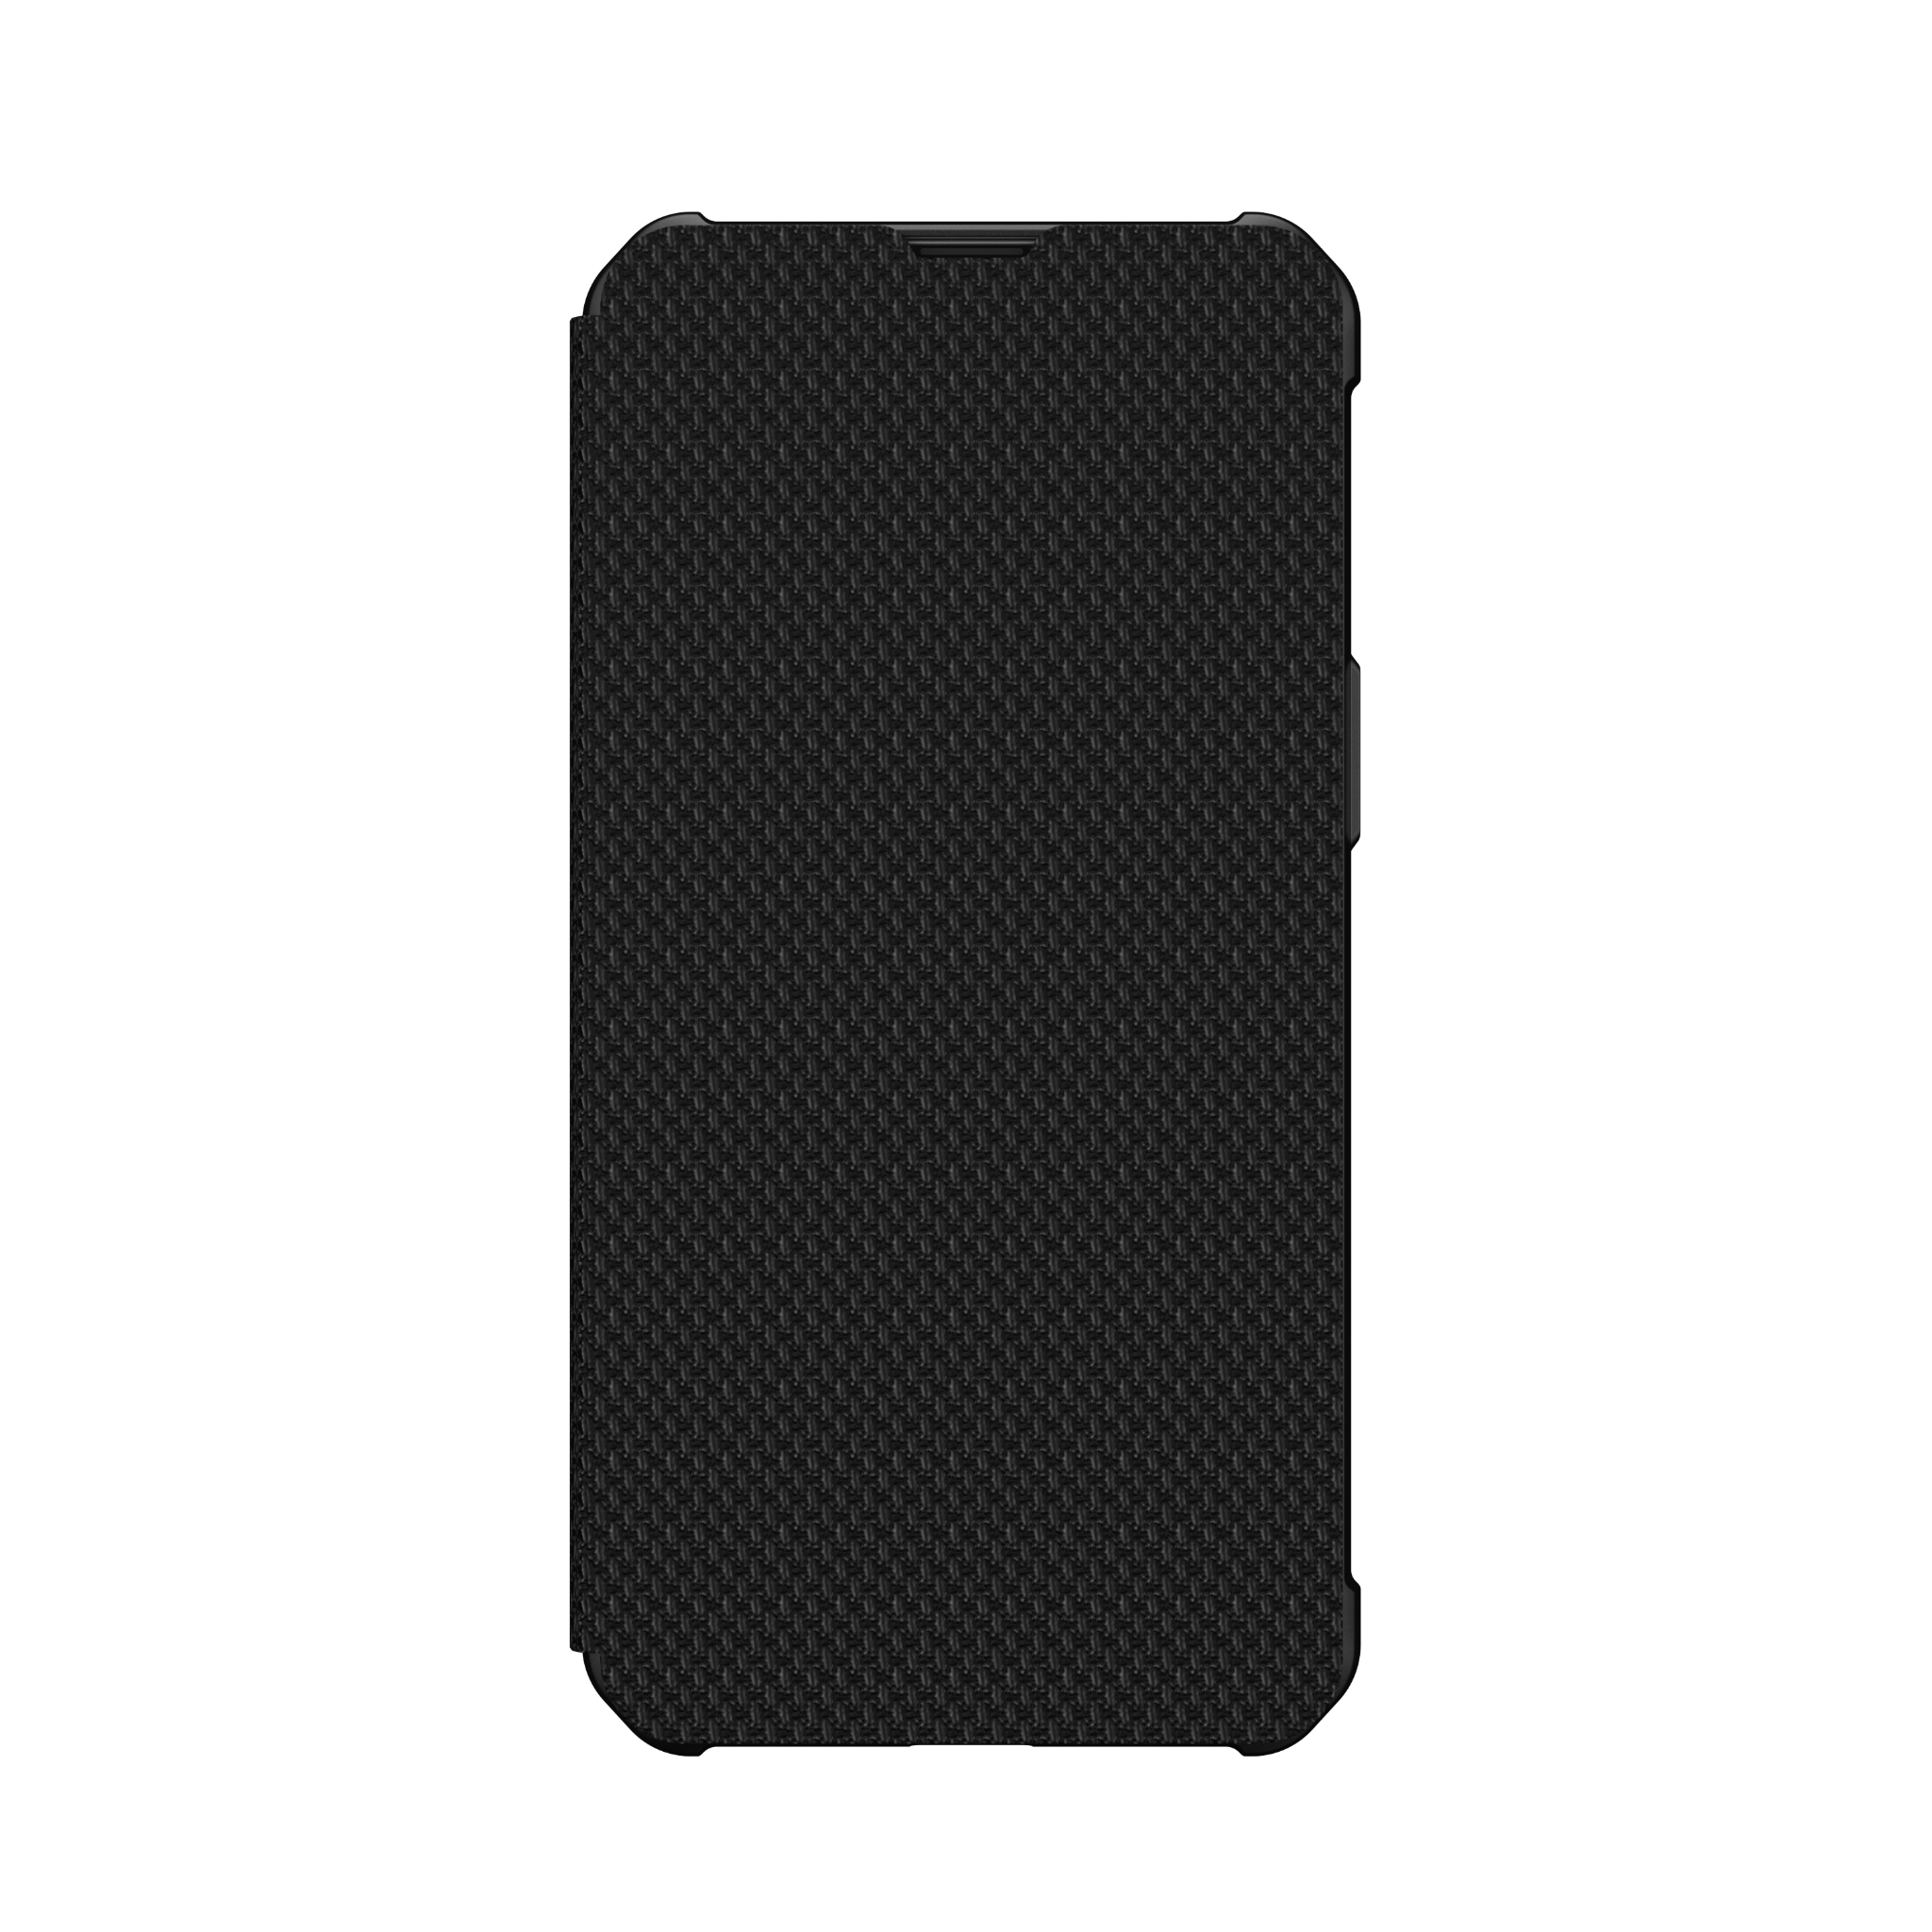  Ốp lưng Metropolis cho iPhone 13 Pro Max [6.7 inch] 